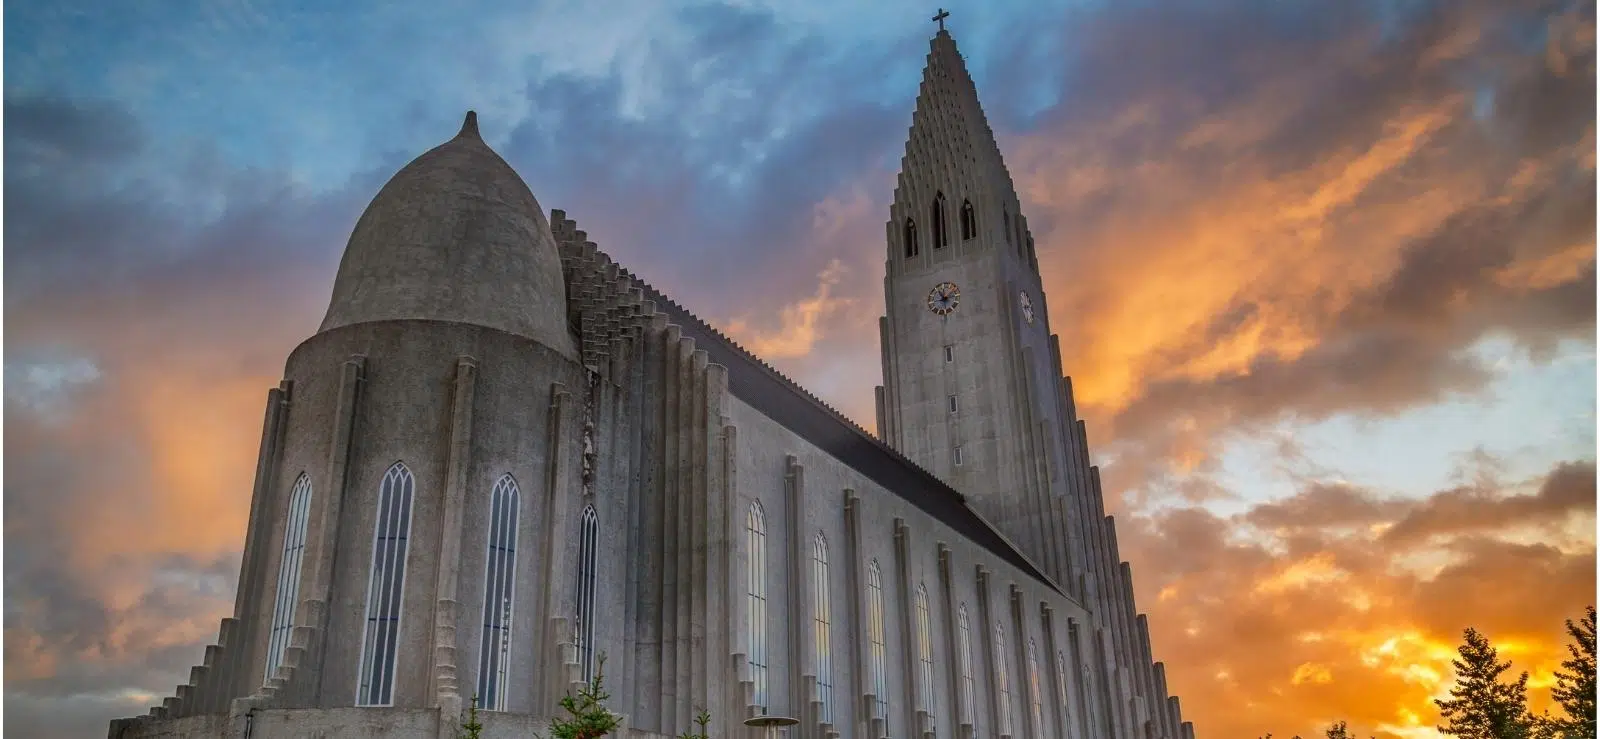 Iceland In June Hallgrimskirkja Church with sunrise in the background